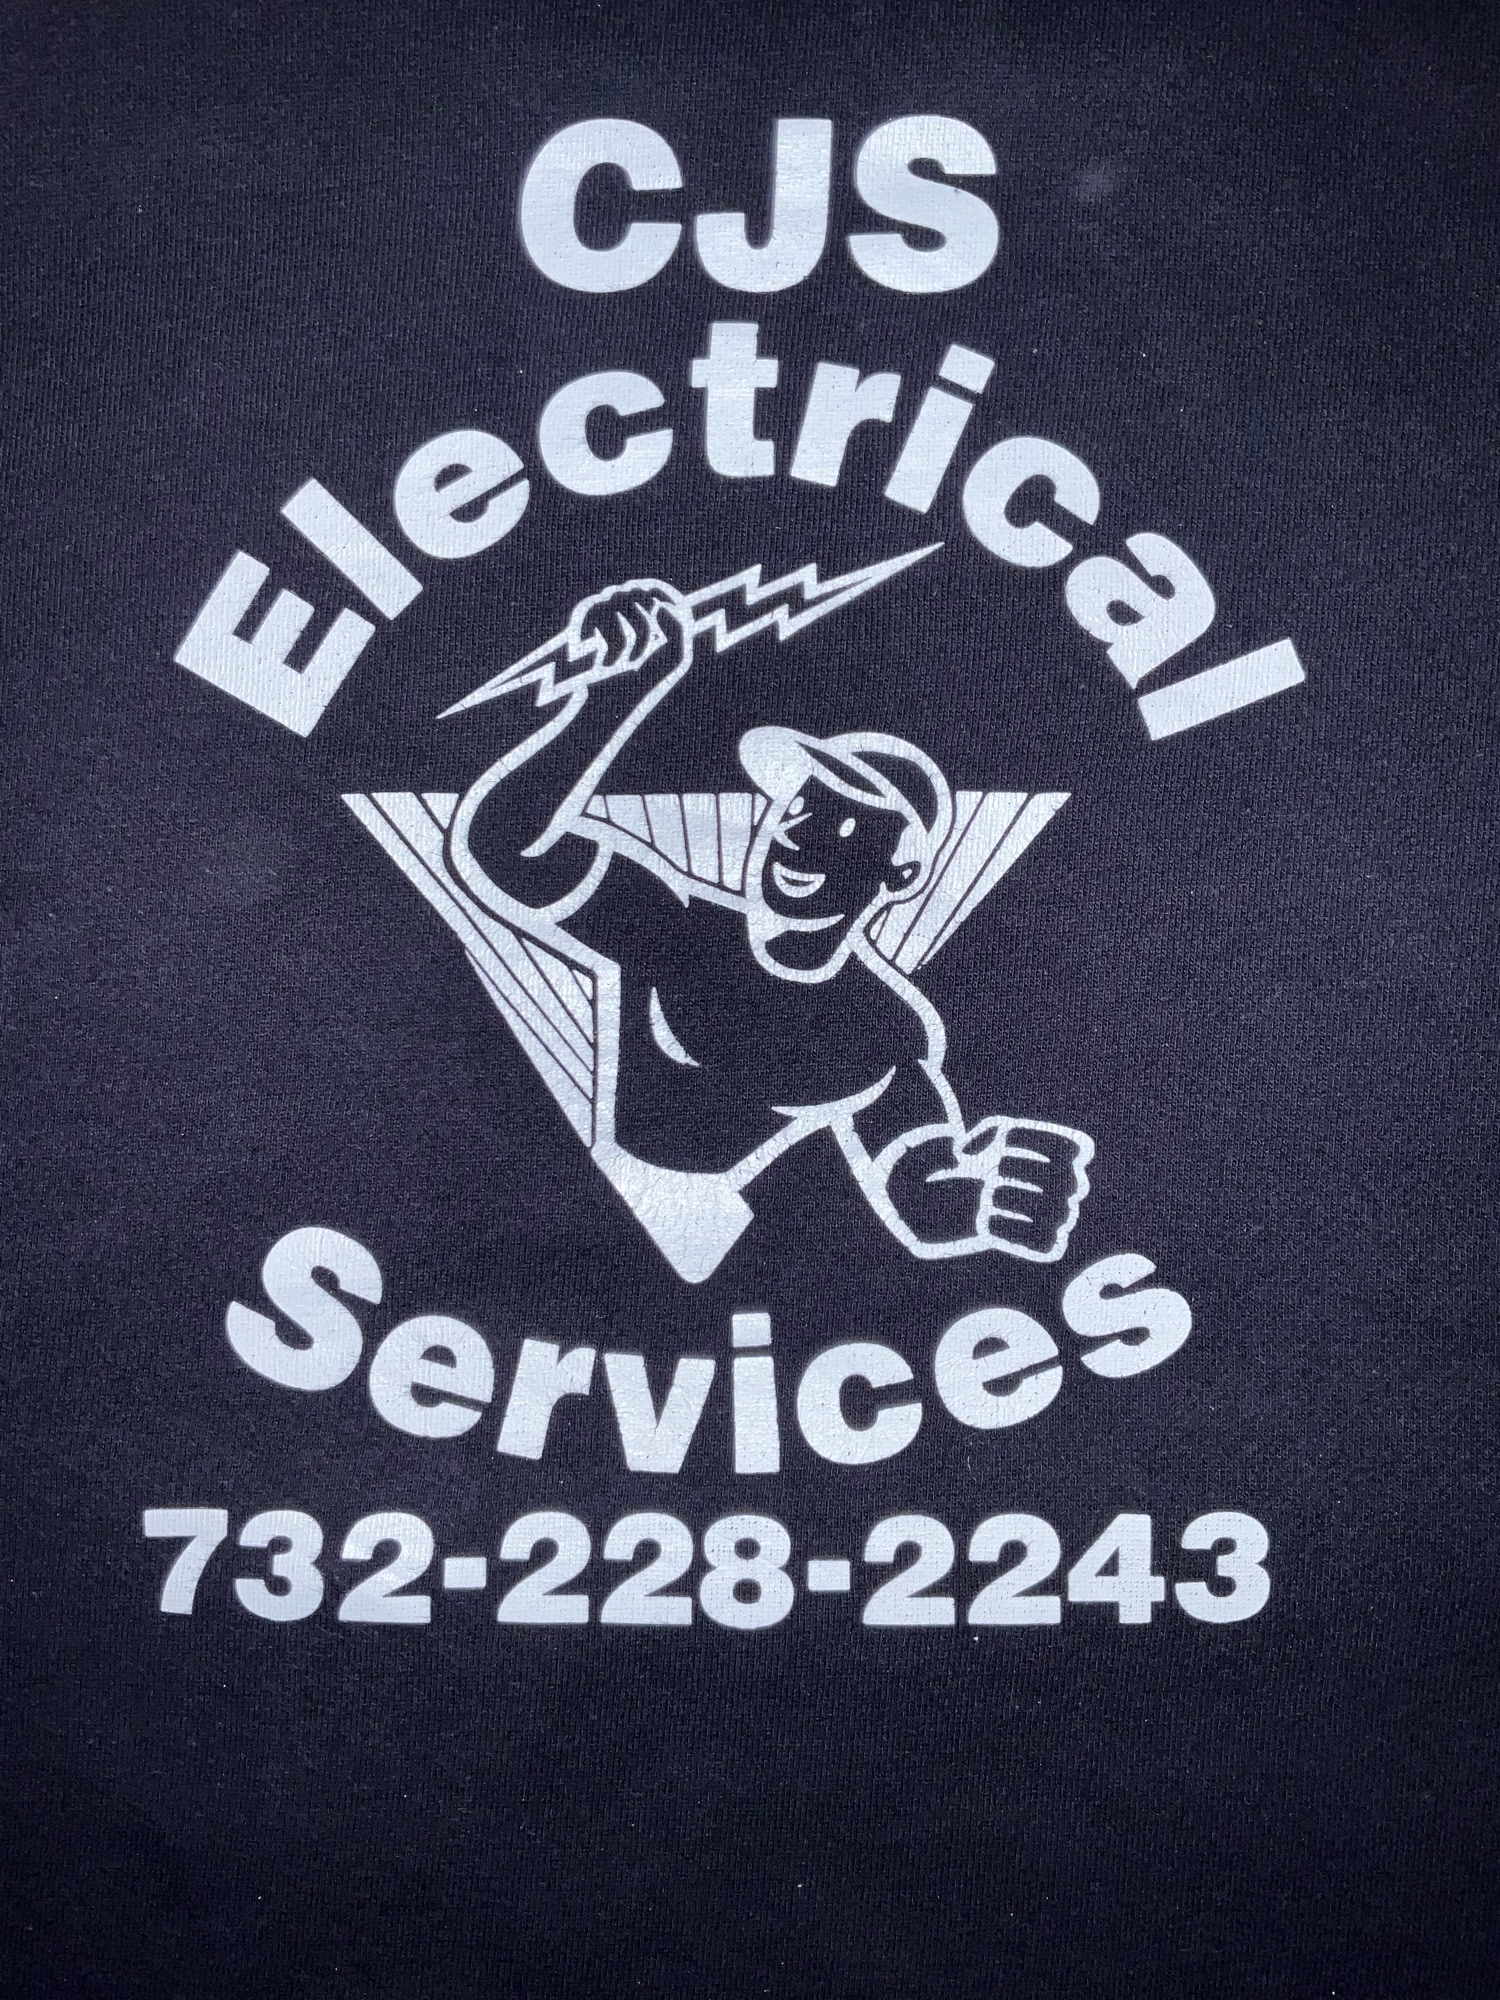 CJS Electrical Services Logo